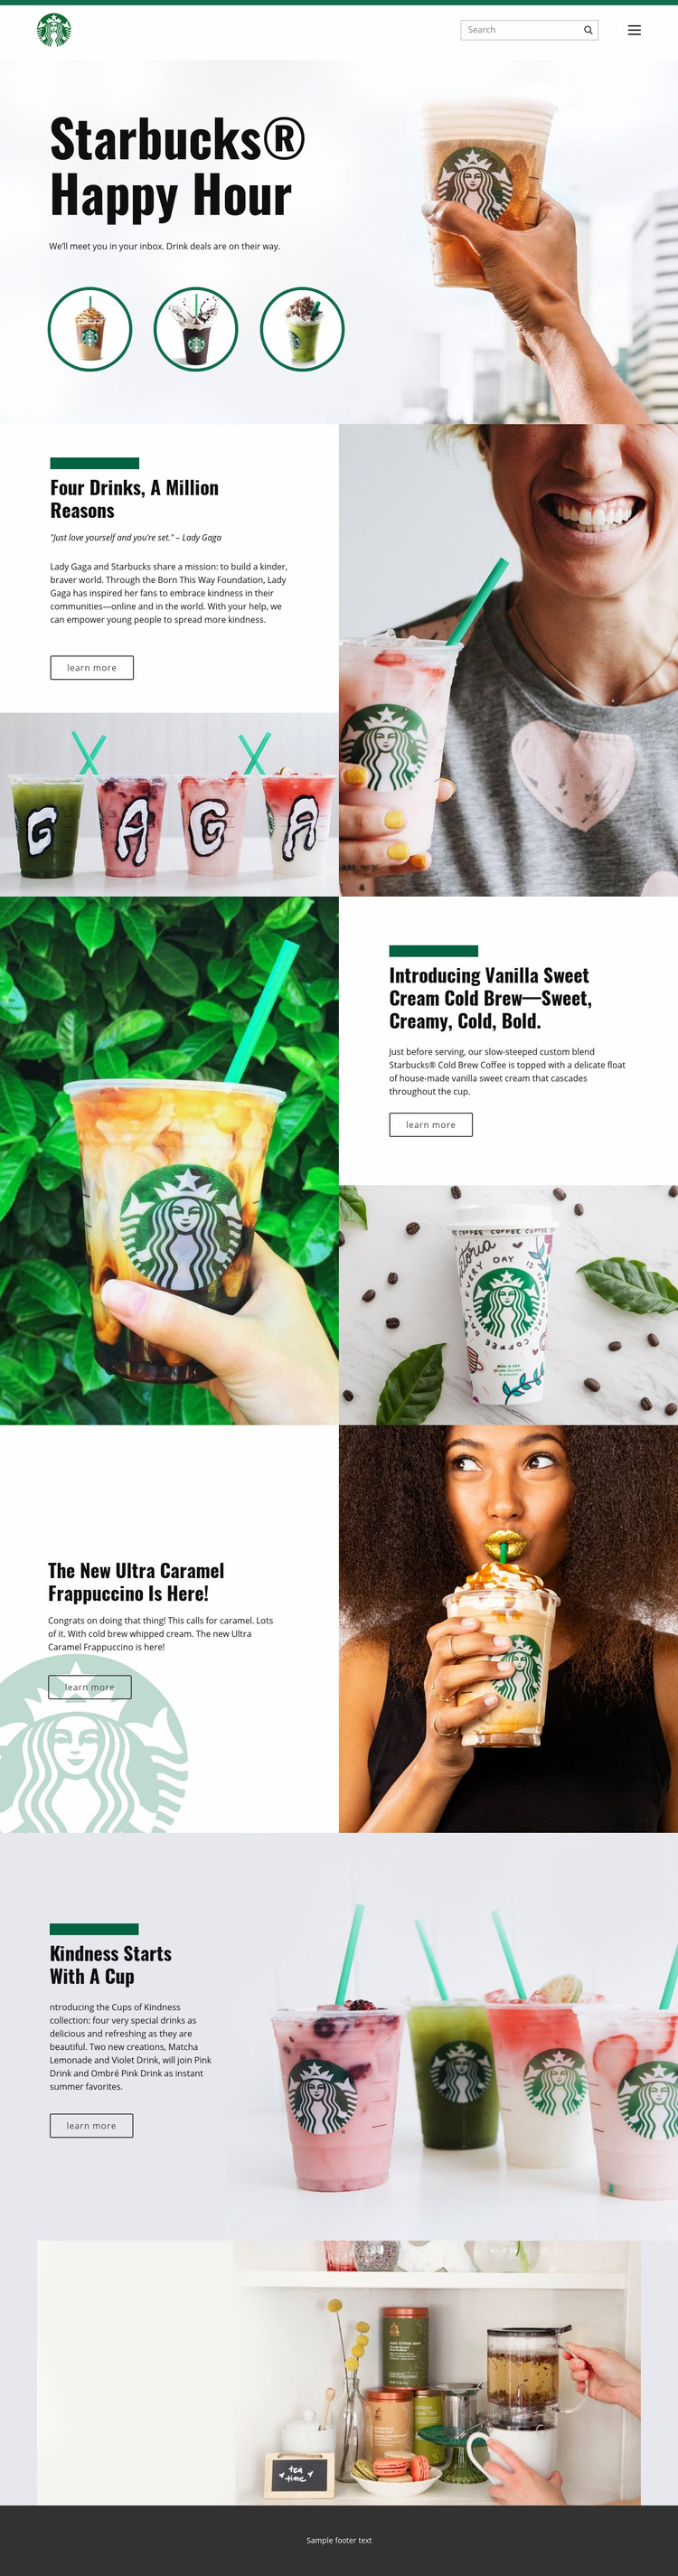 Starbucks Coffee Web Page Design